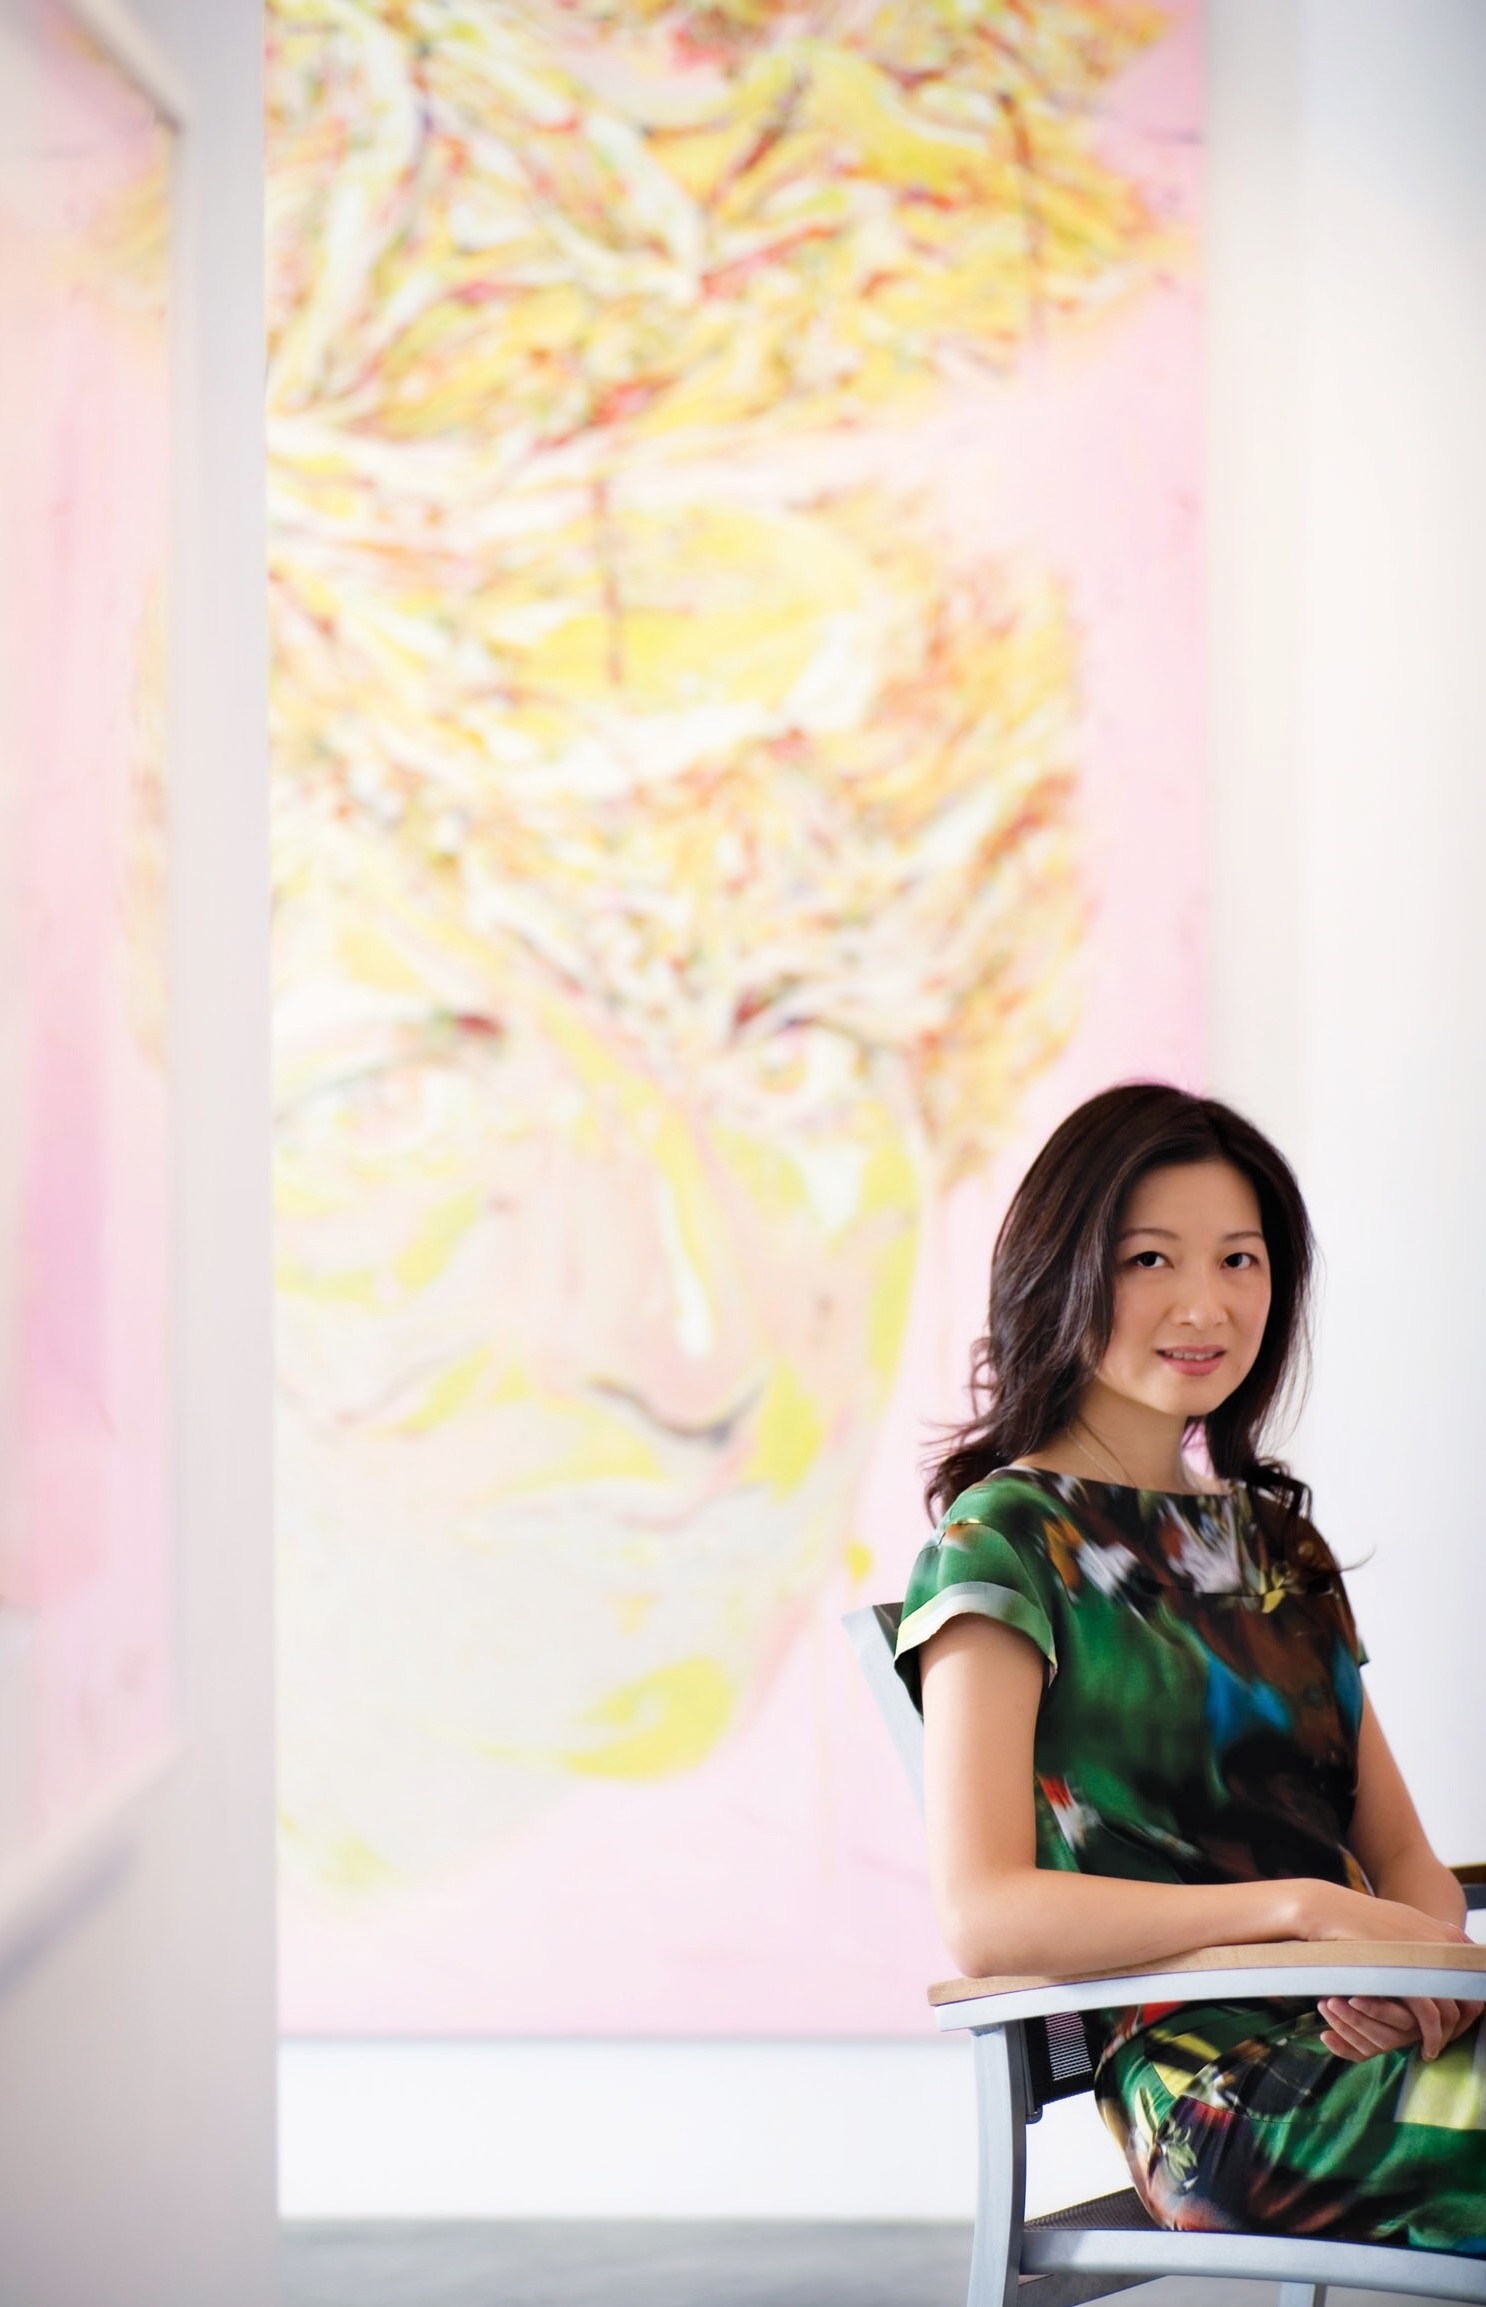 Angela Li, co-president of HKAGA and gallery owner